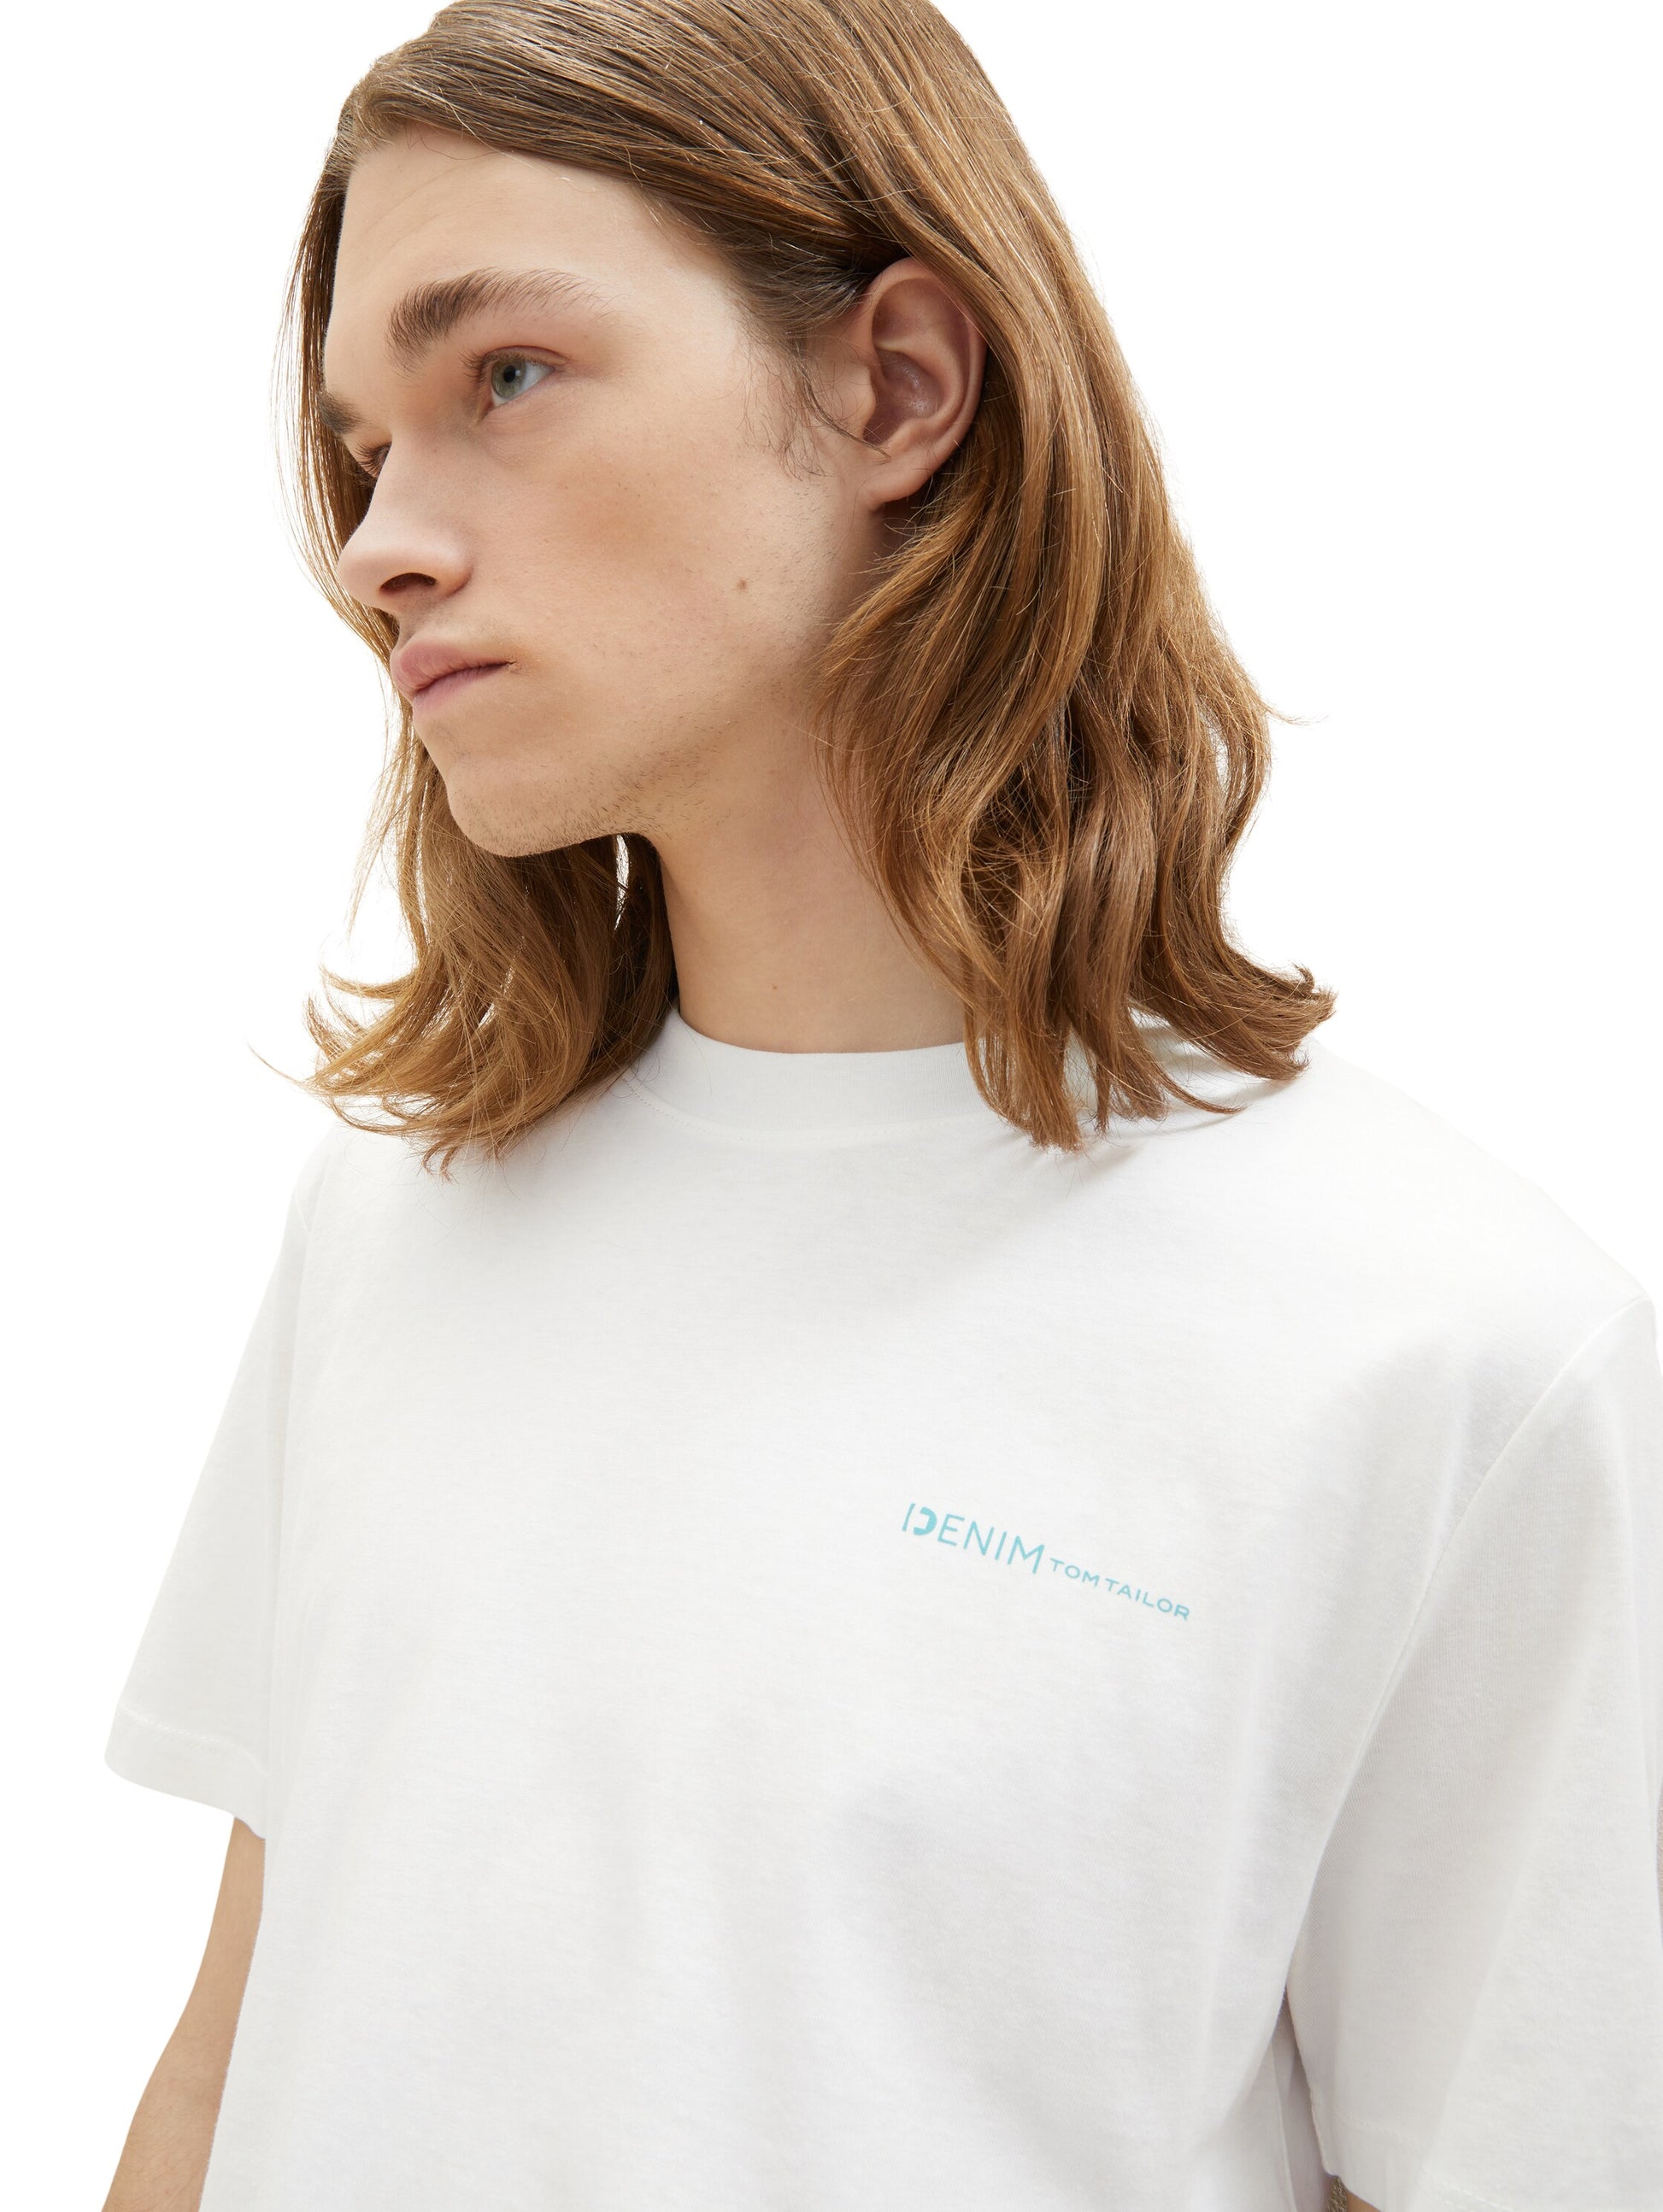 photo print Modehaus t-shirt – Blum-Jundt